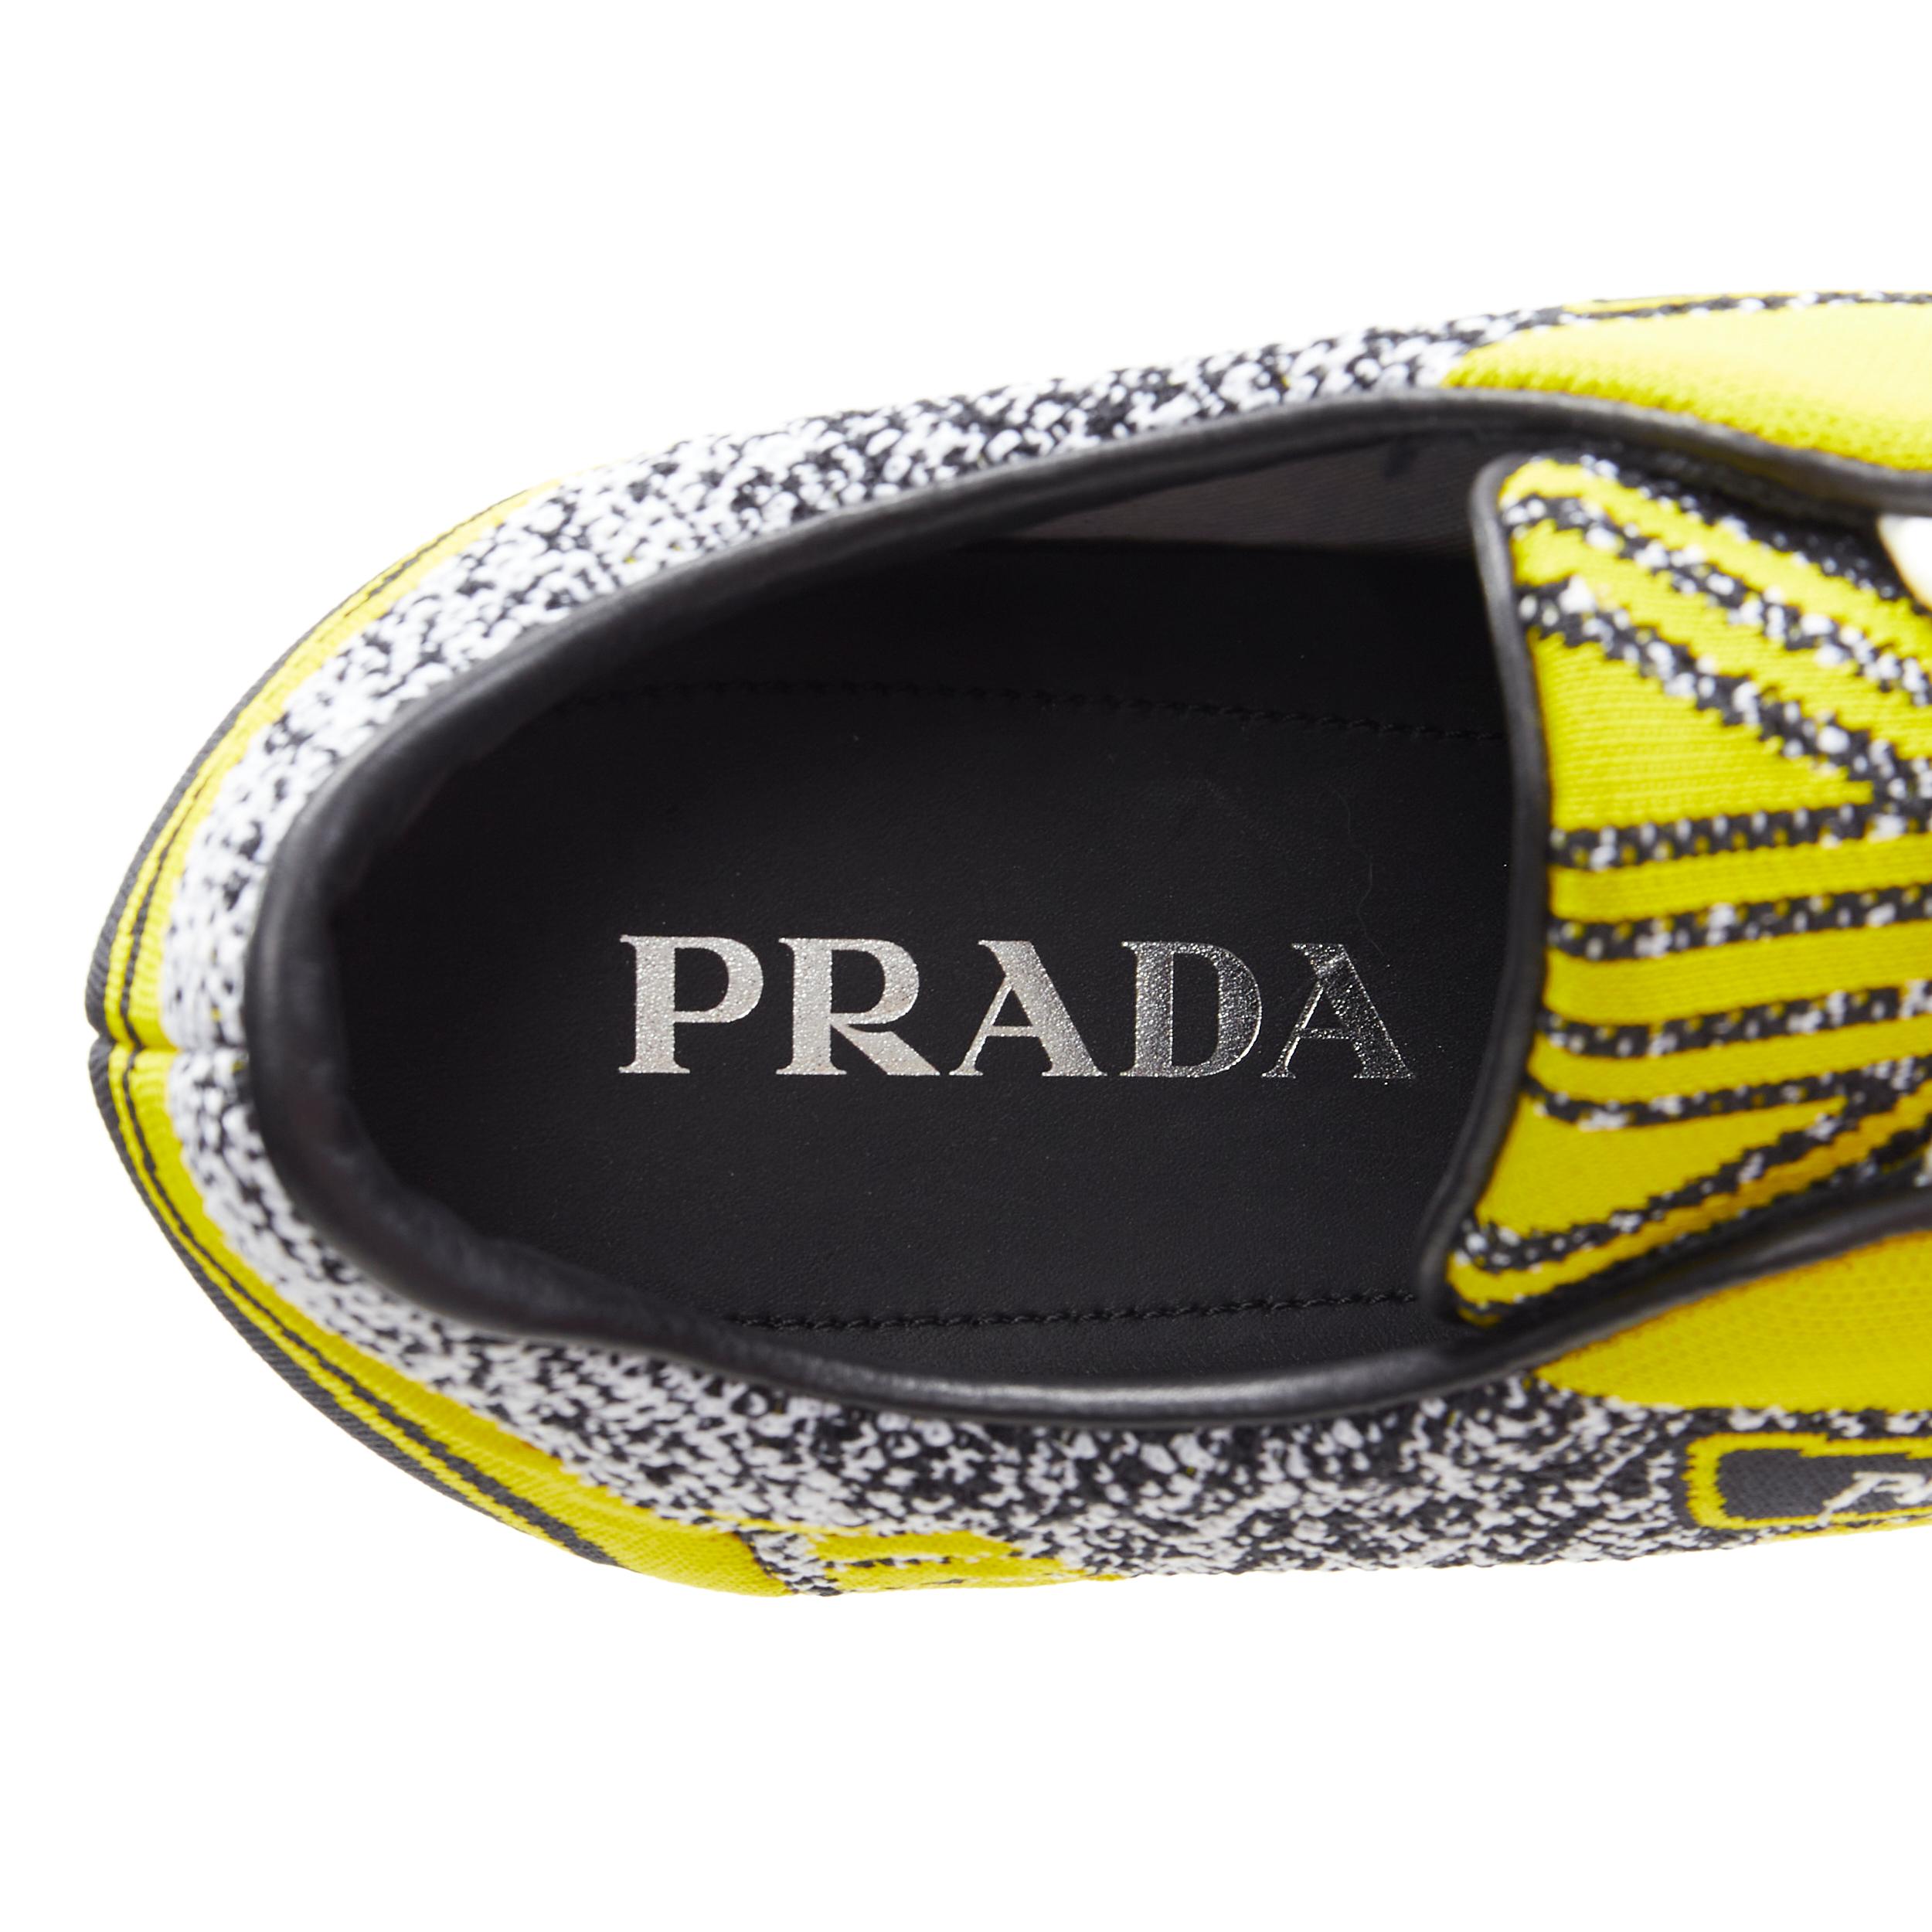 new PRADA Sport Knit yellow black logo sock knit low top sneakers UK8.5 EU42.5 4